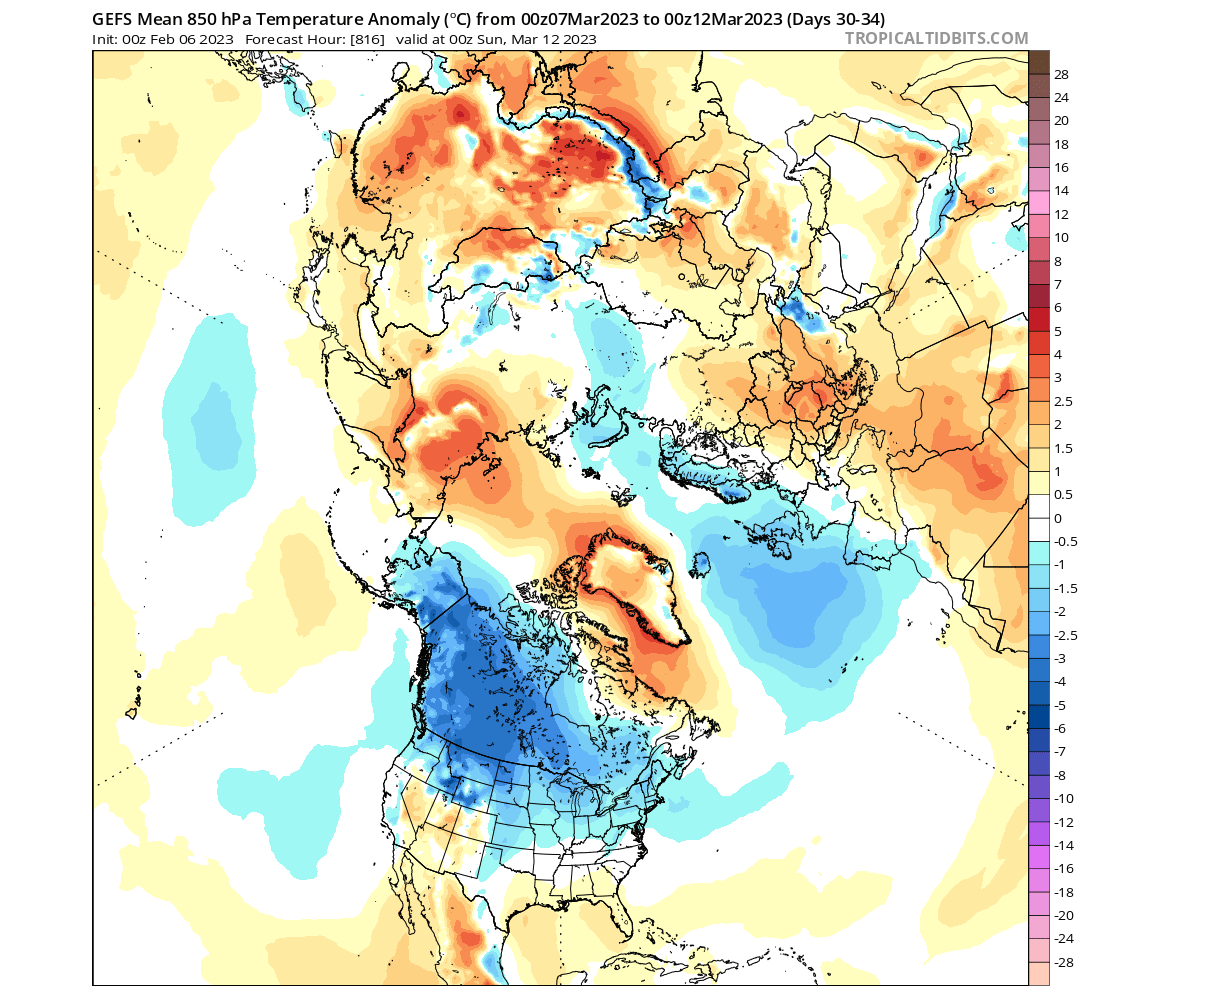 stratospheric-warming-winter-polar-vortex-north-hemisphere-forecast-temperature-NOAA-gefs-extended-ensemble-united-states-early-march